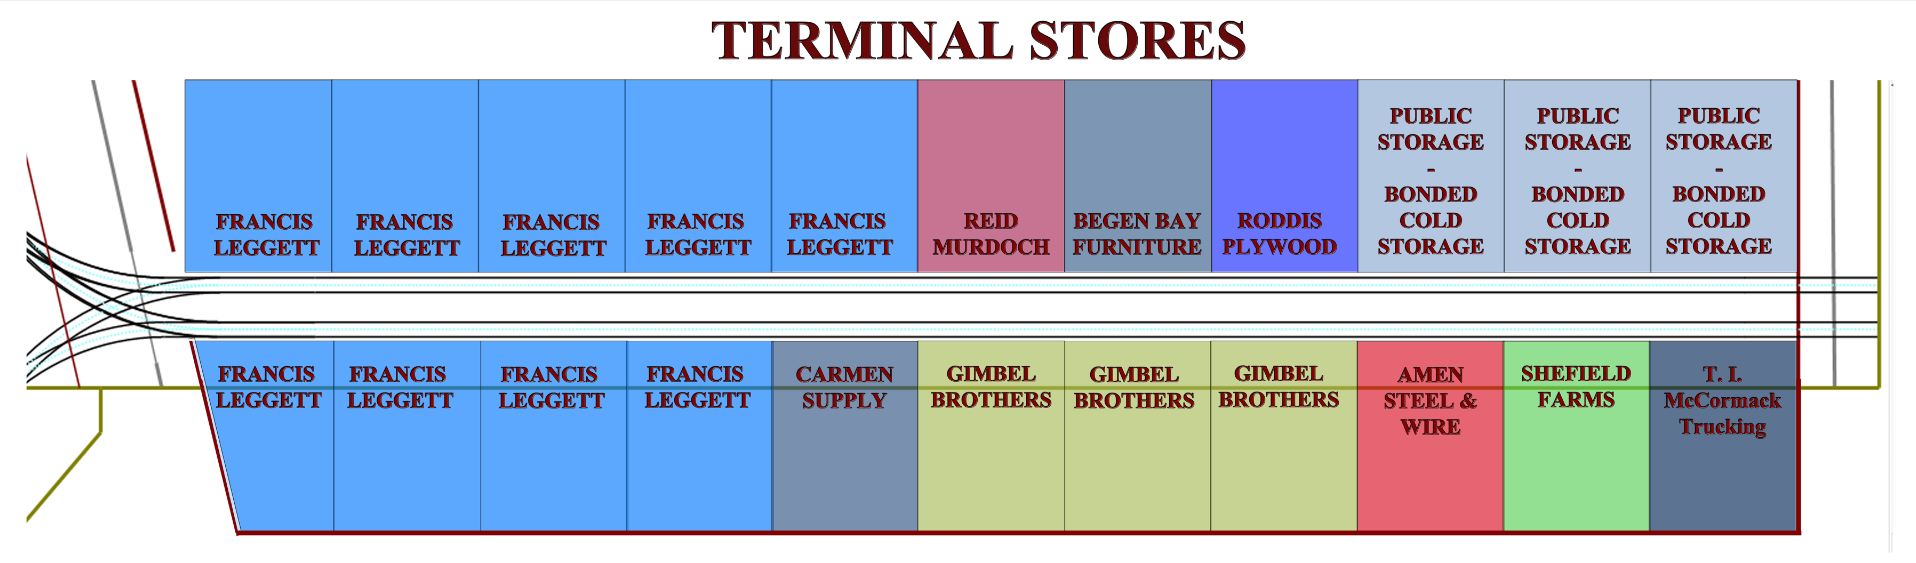 Terminal Stores